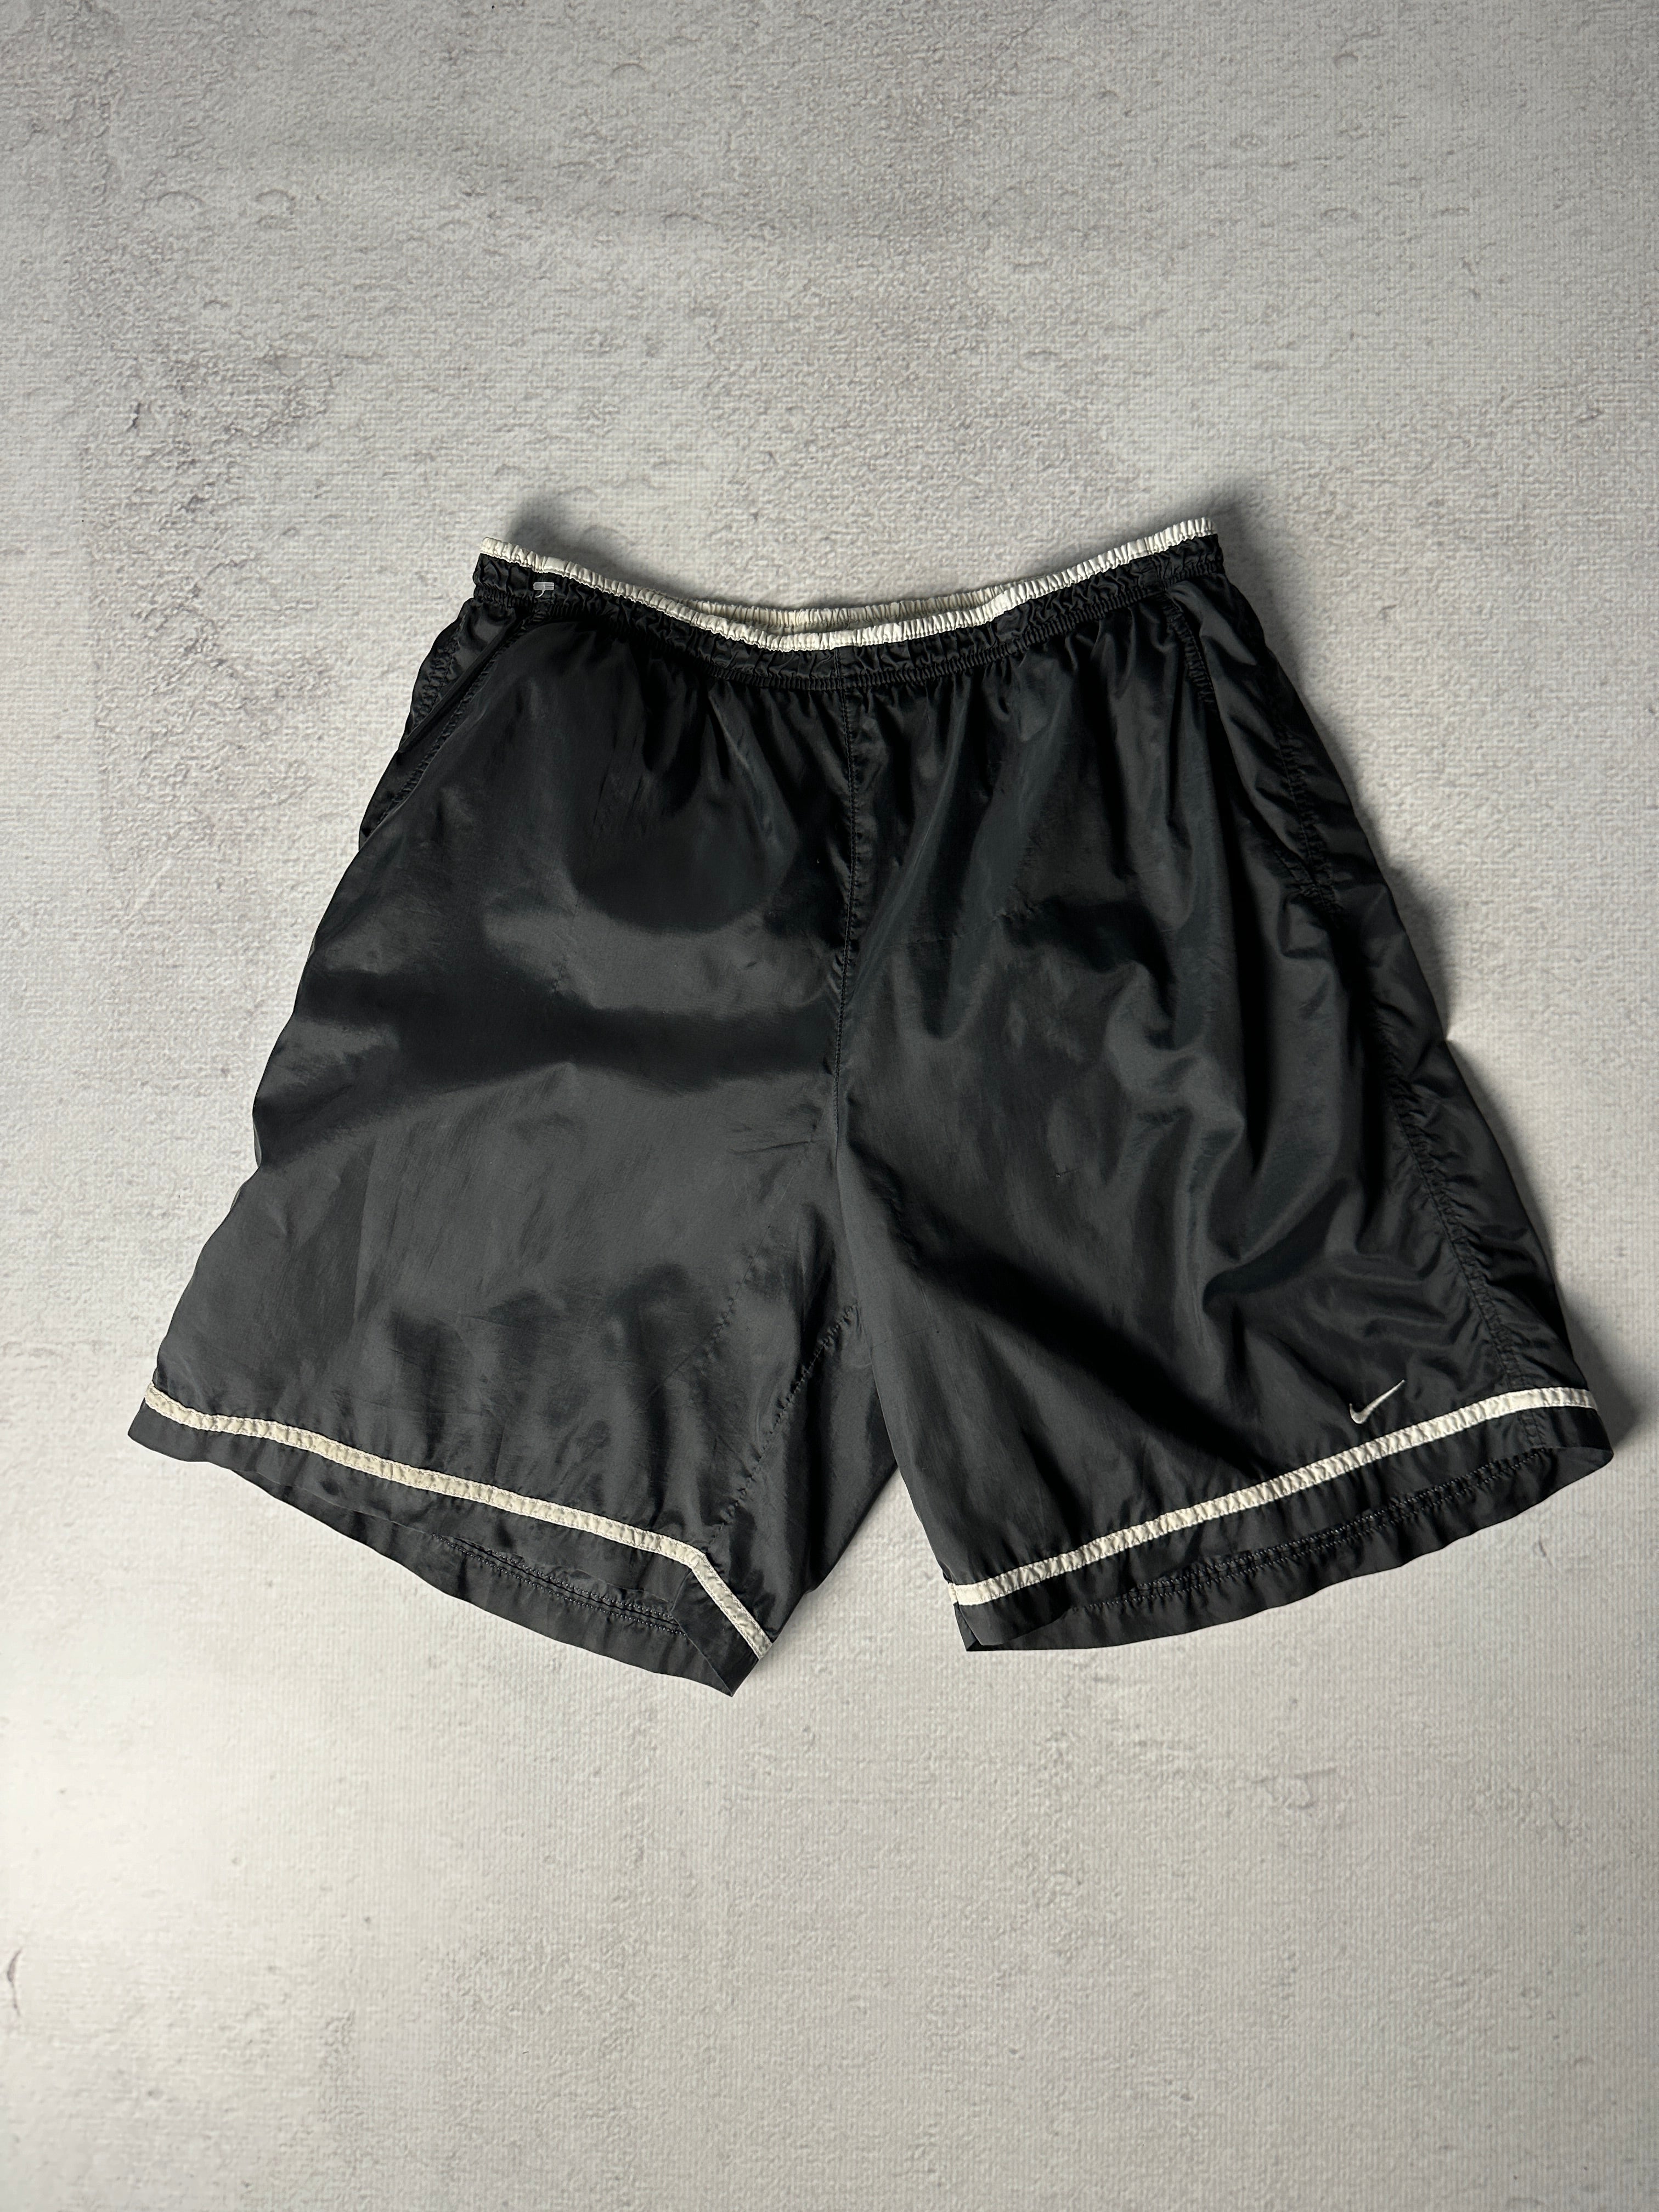 Vintage Nike Track Shorts - Men's Large